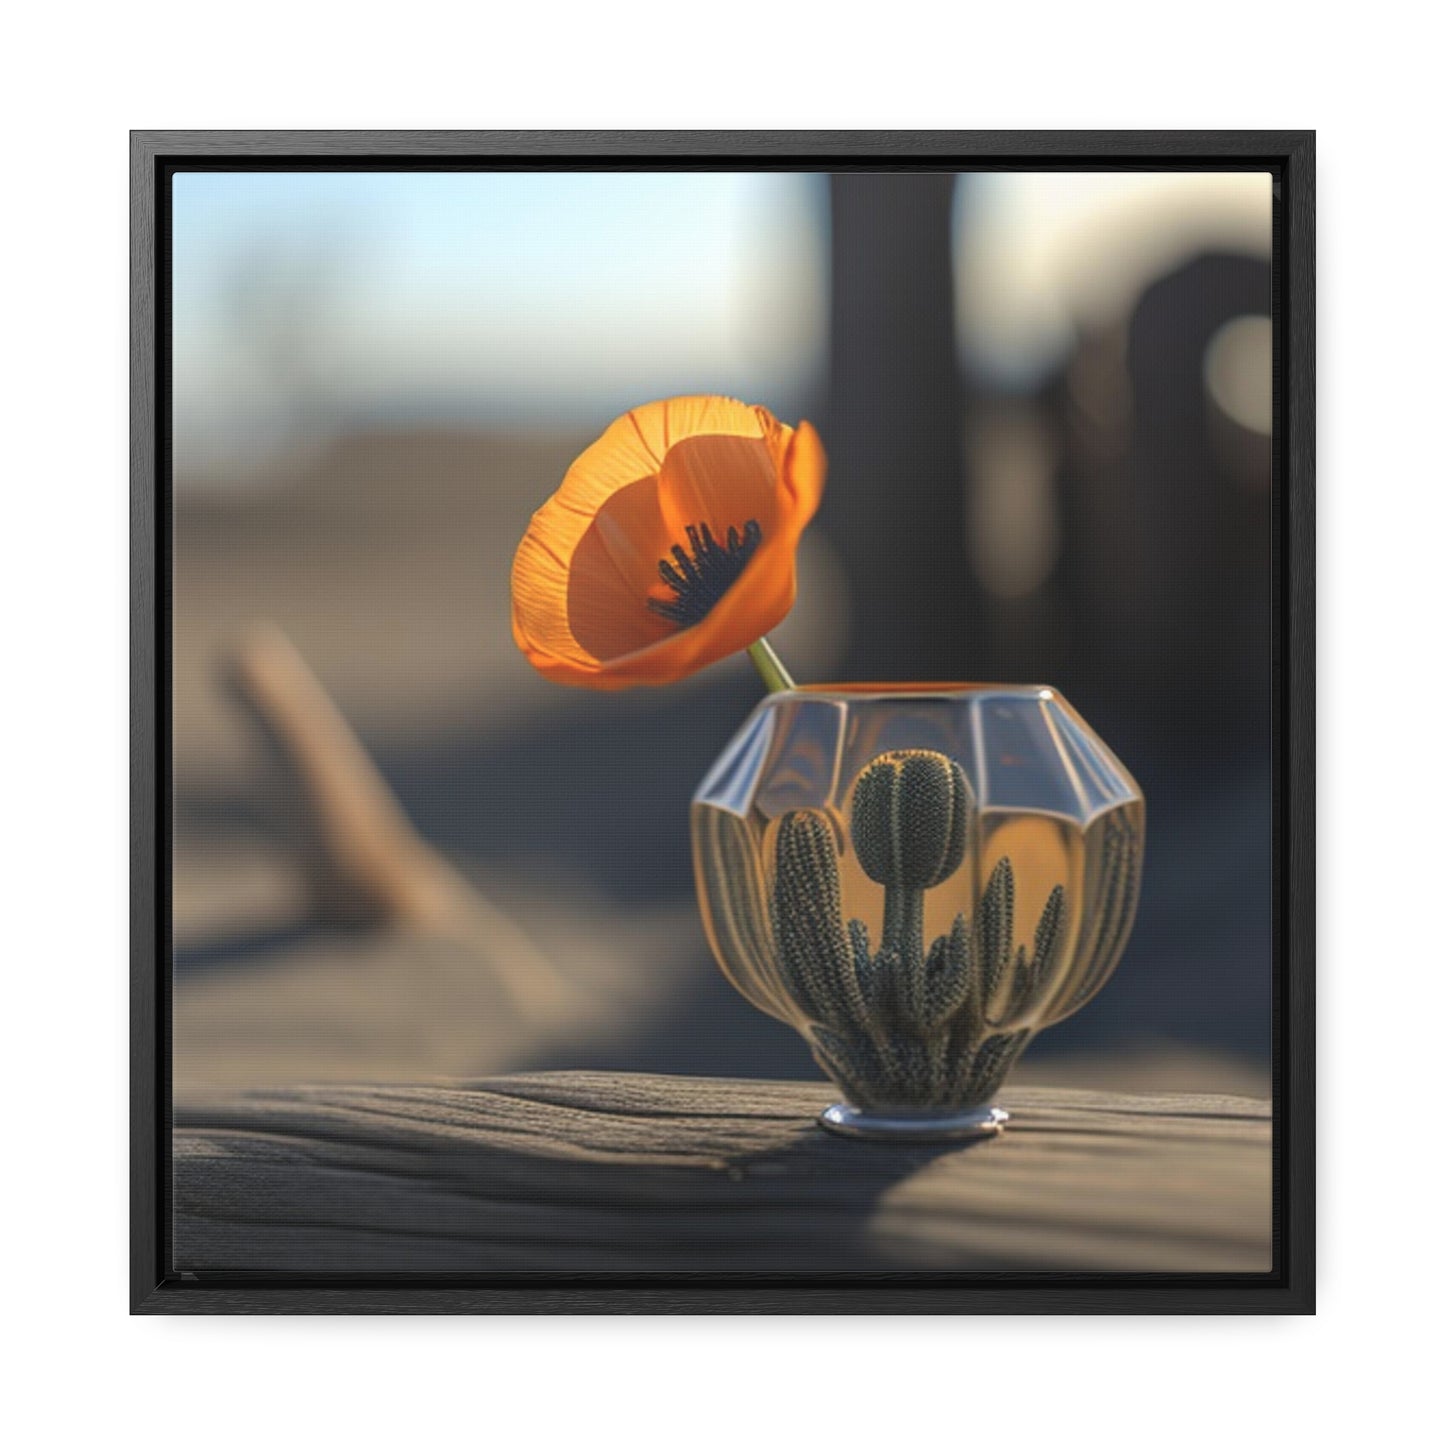 Gallery Canvas Wraps, Square Frame Orange Poppy in a Vase 2